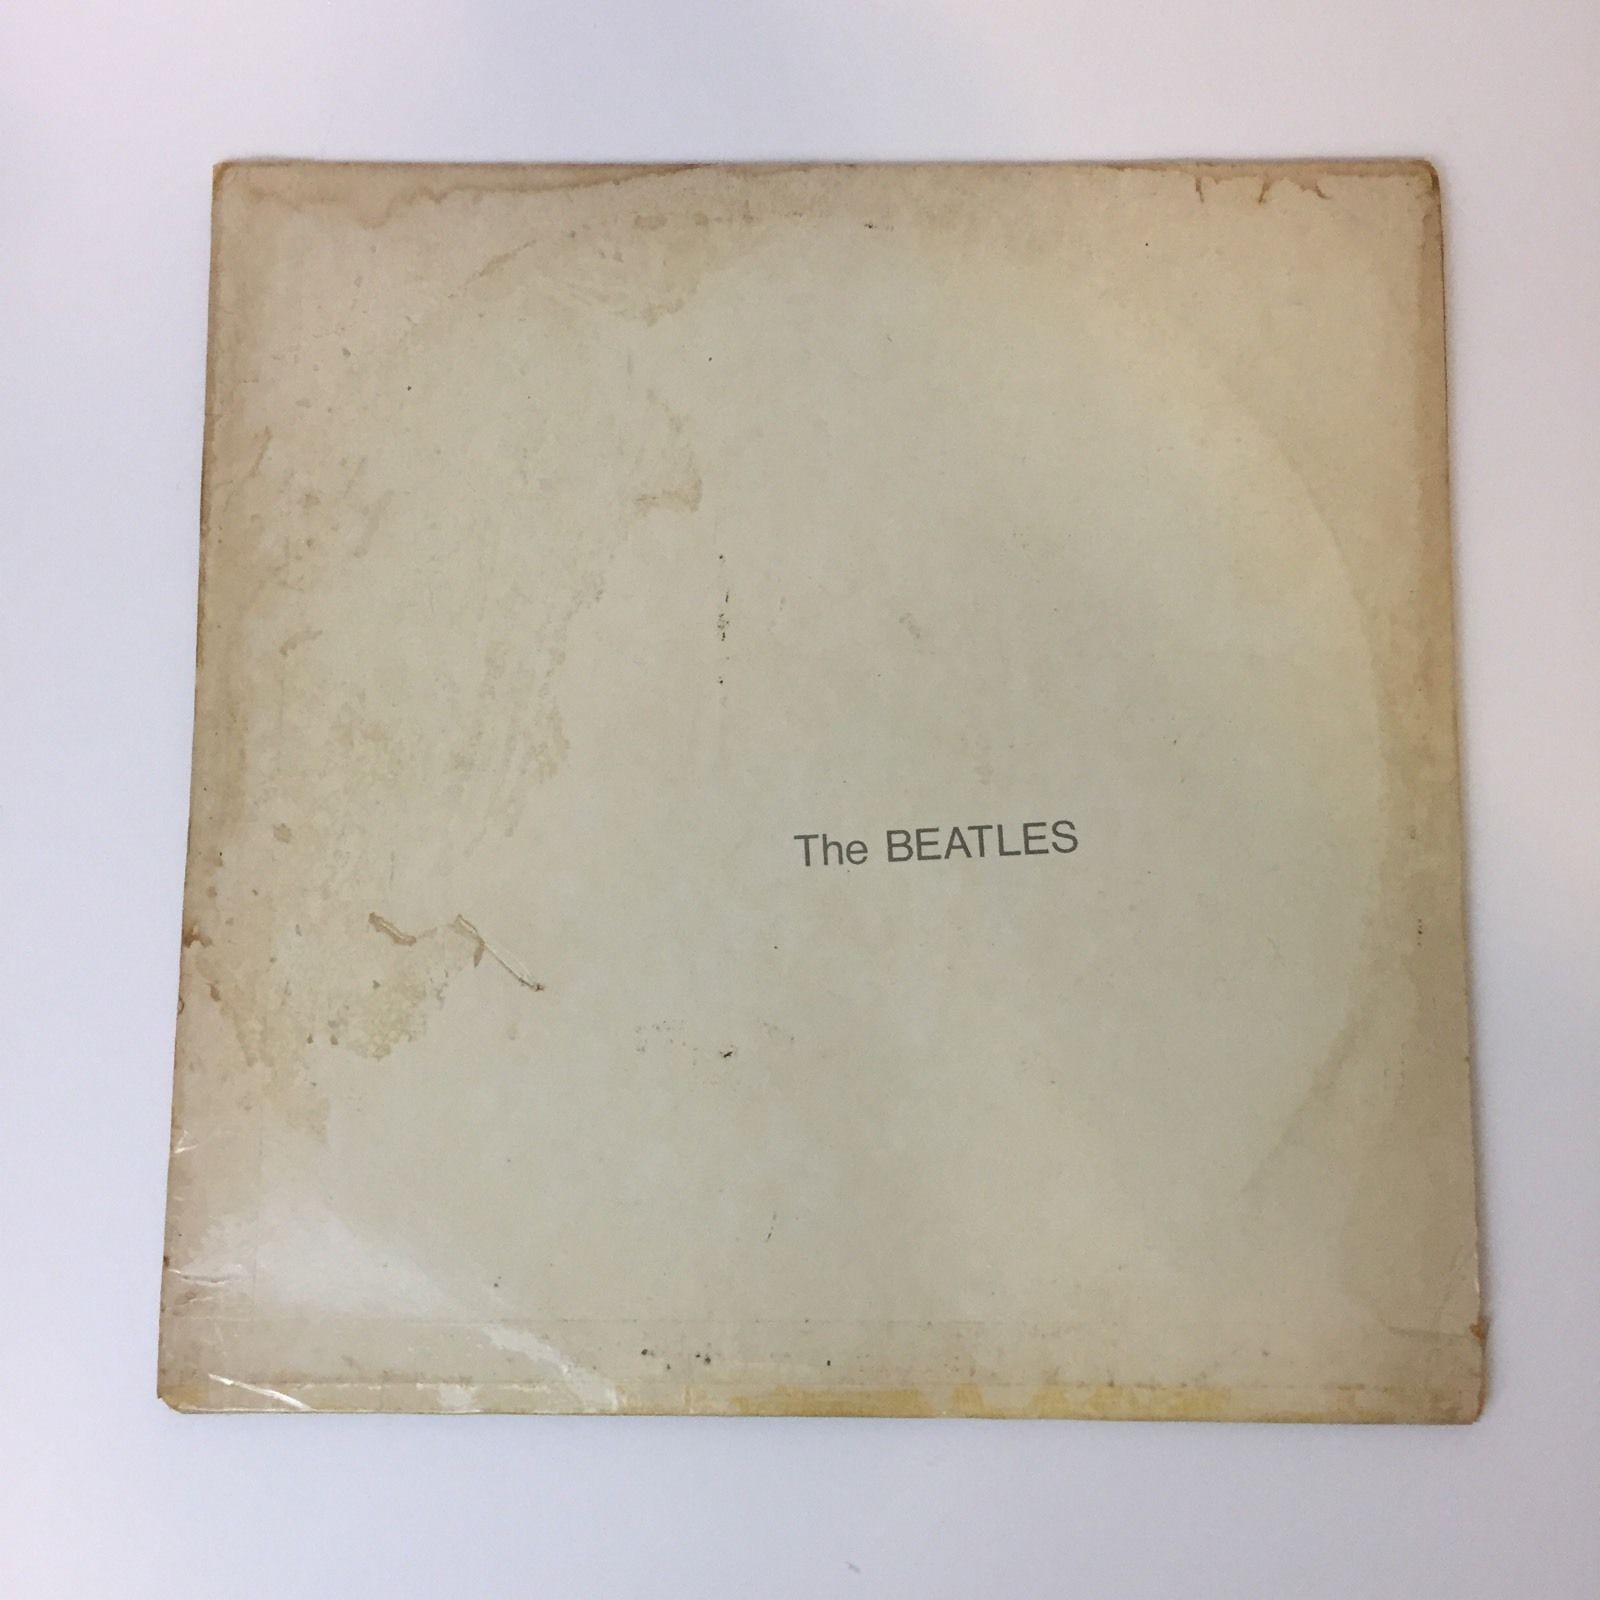 The Beatles - White Album